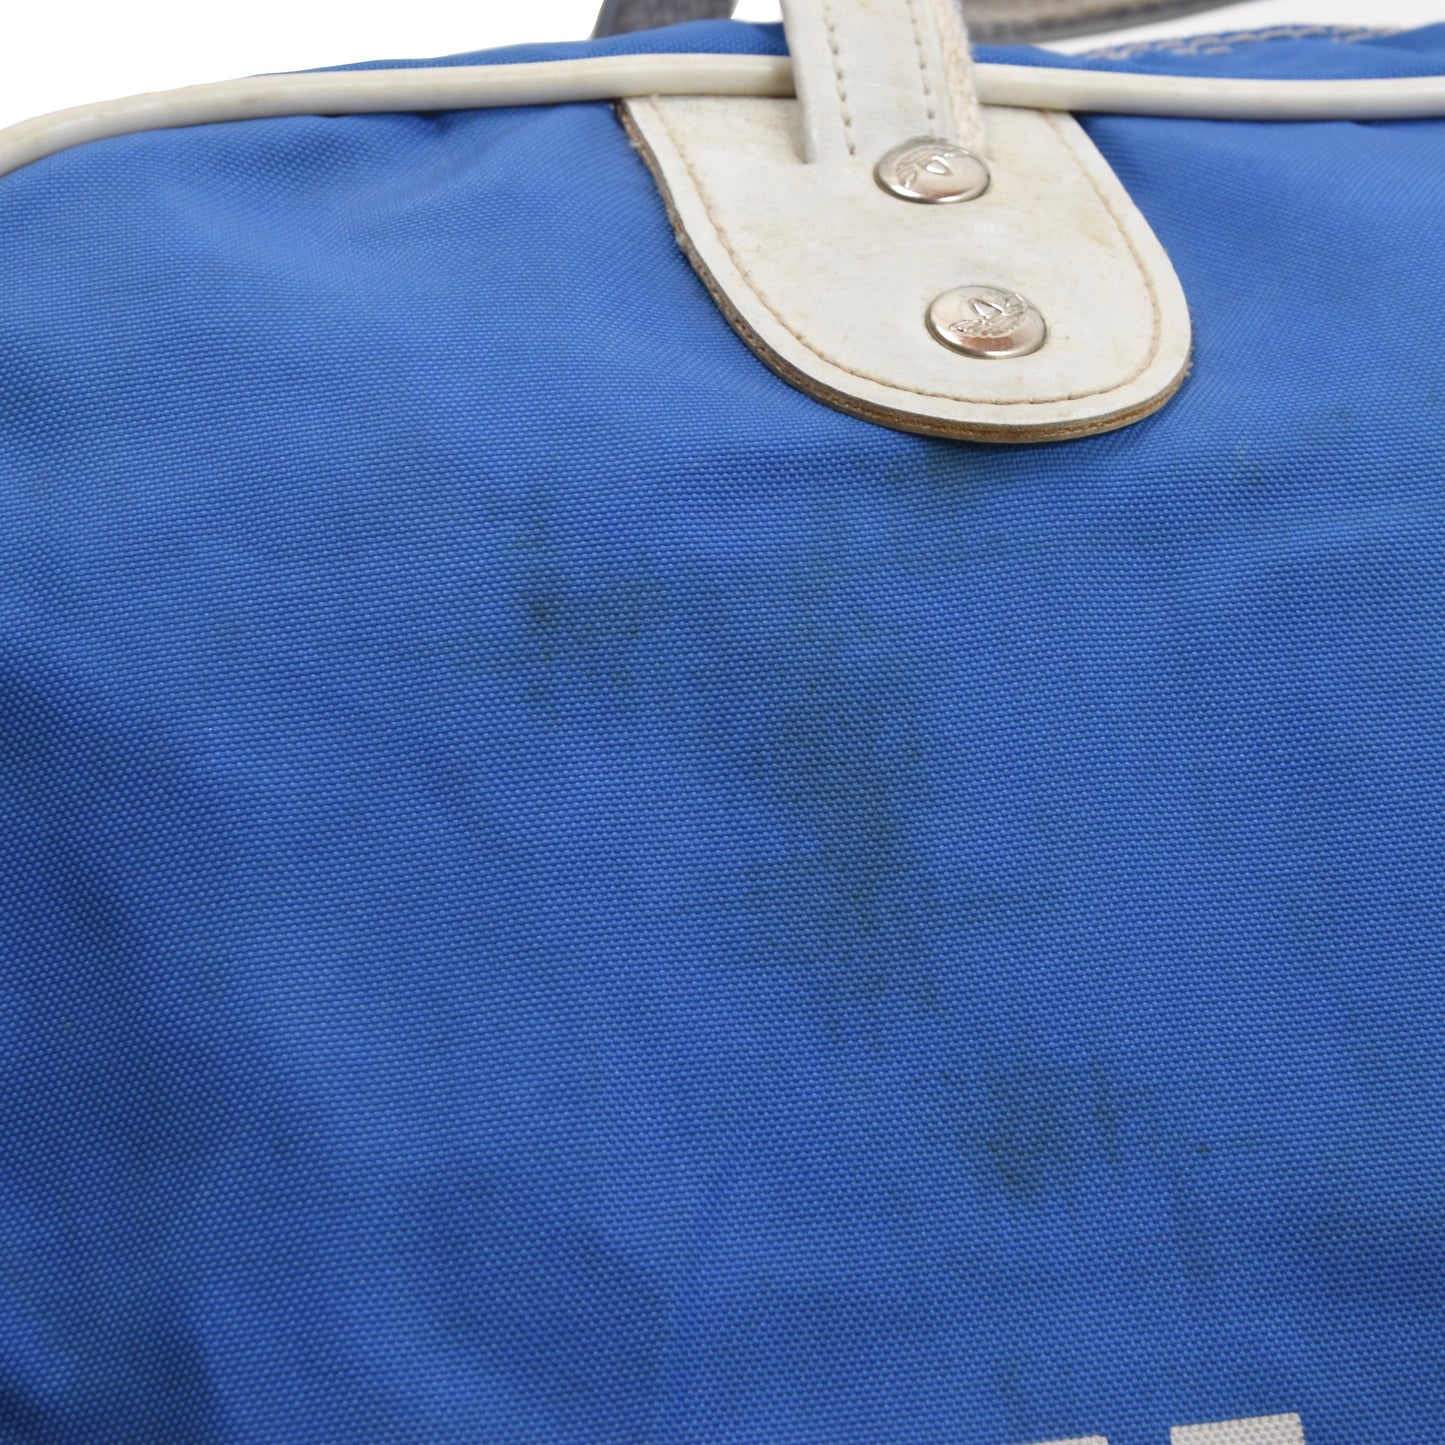 Vintage Adidas Gym Bag Art. 41920 - Blue